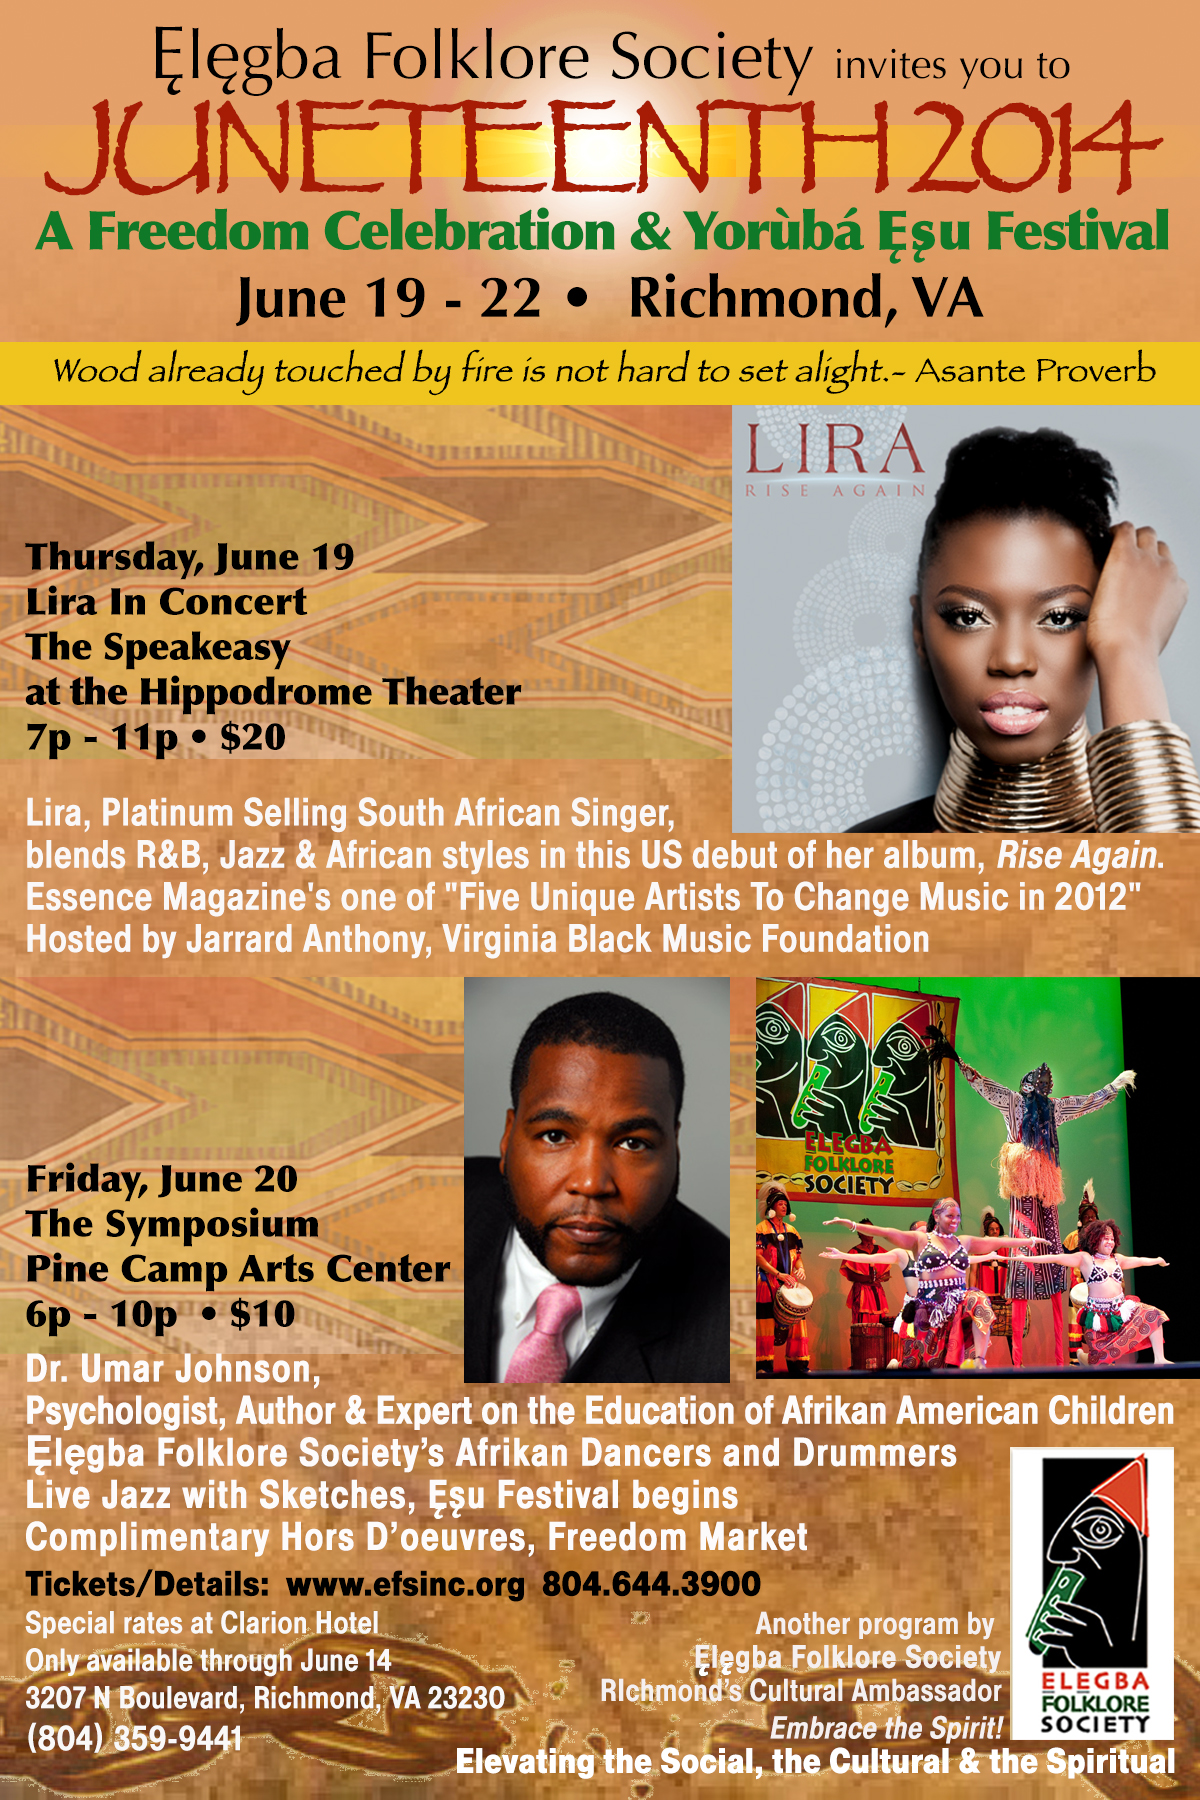 Juneteenth, A Freedom Celebration - JUNE 19 - 20, 2015 | Elegba ...